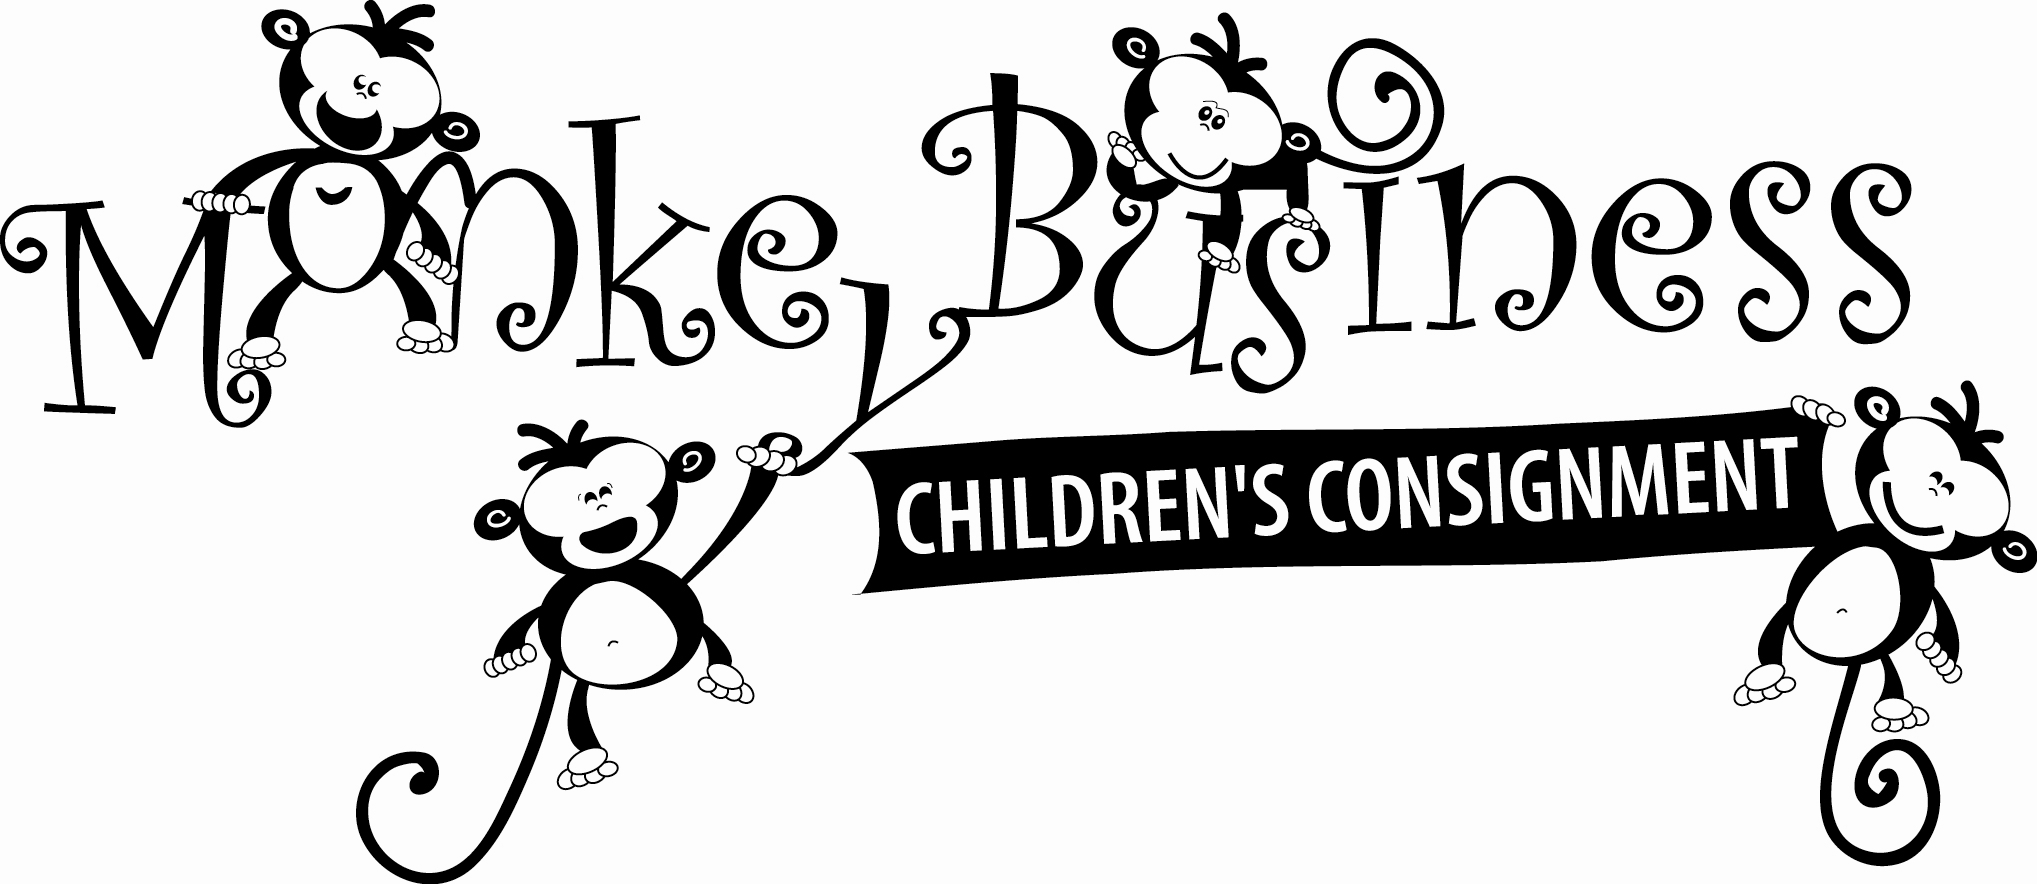 Monkey Business Children's Consignment